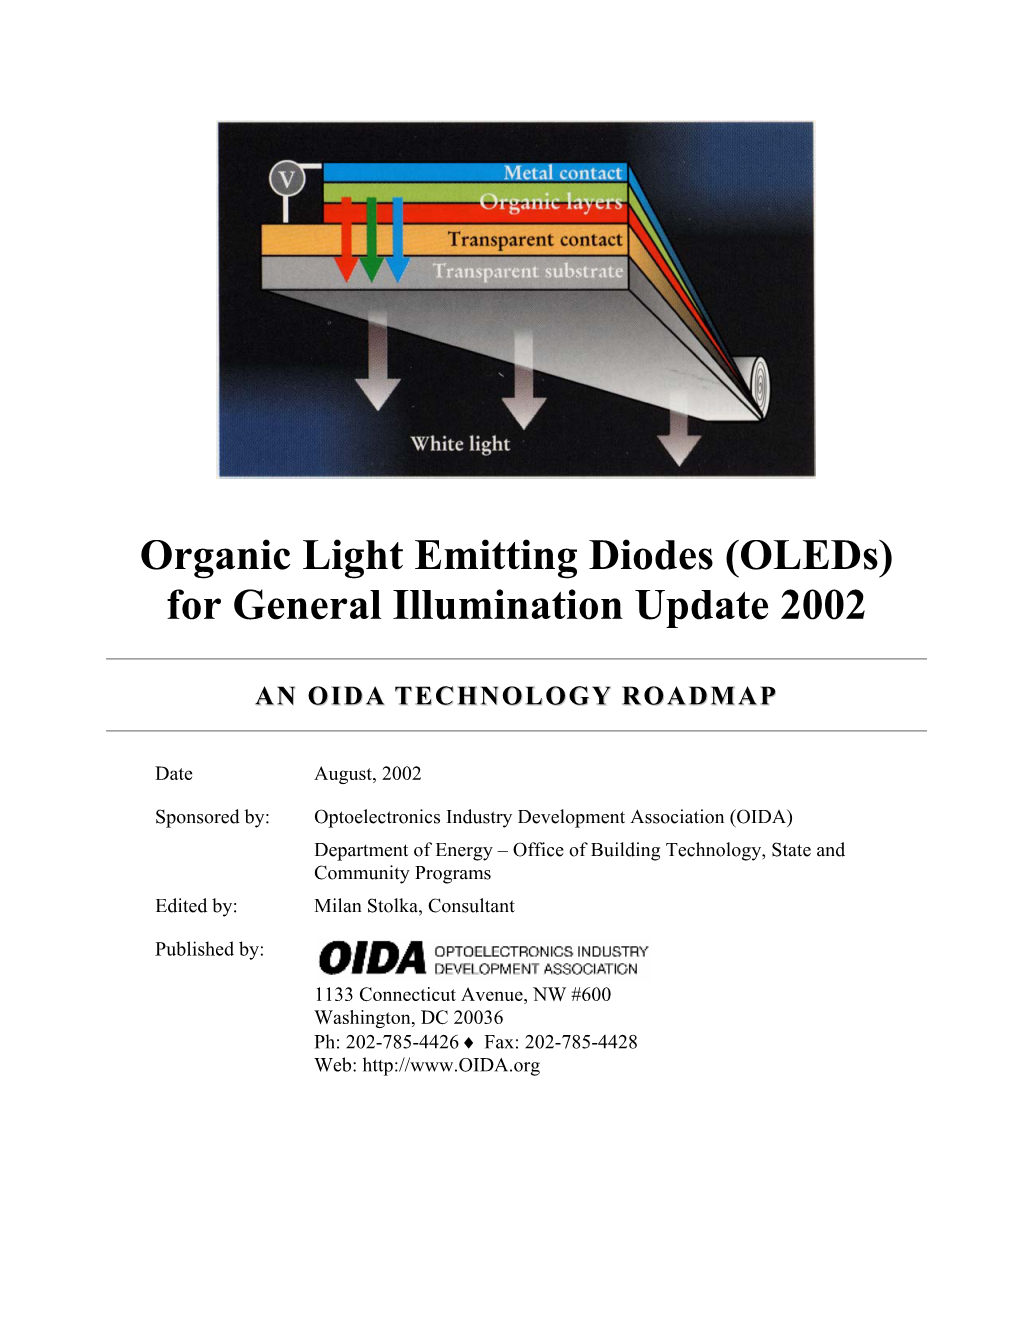 Organic Light Emitting Diodes (Oleds) for General Illumination Update 2002